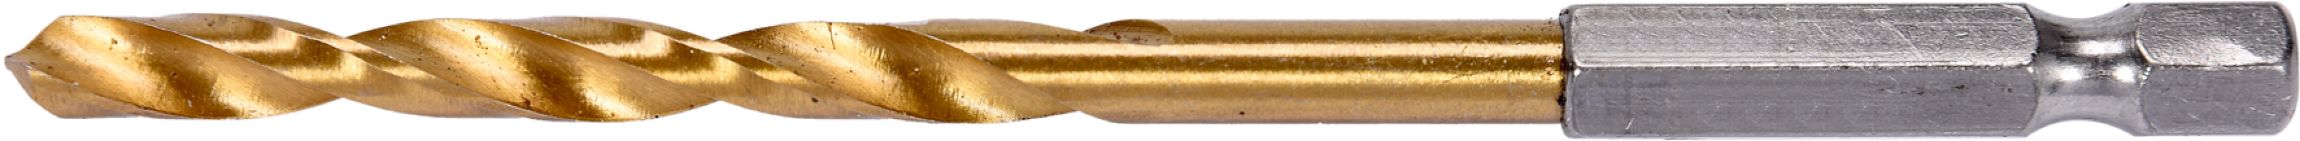 Vrtk do kovu HSS-titan 8,0mm se estihranou stopkou 1/4" Yato YT-44768